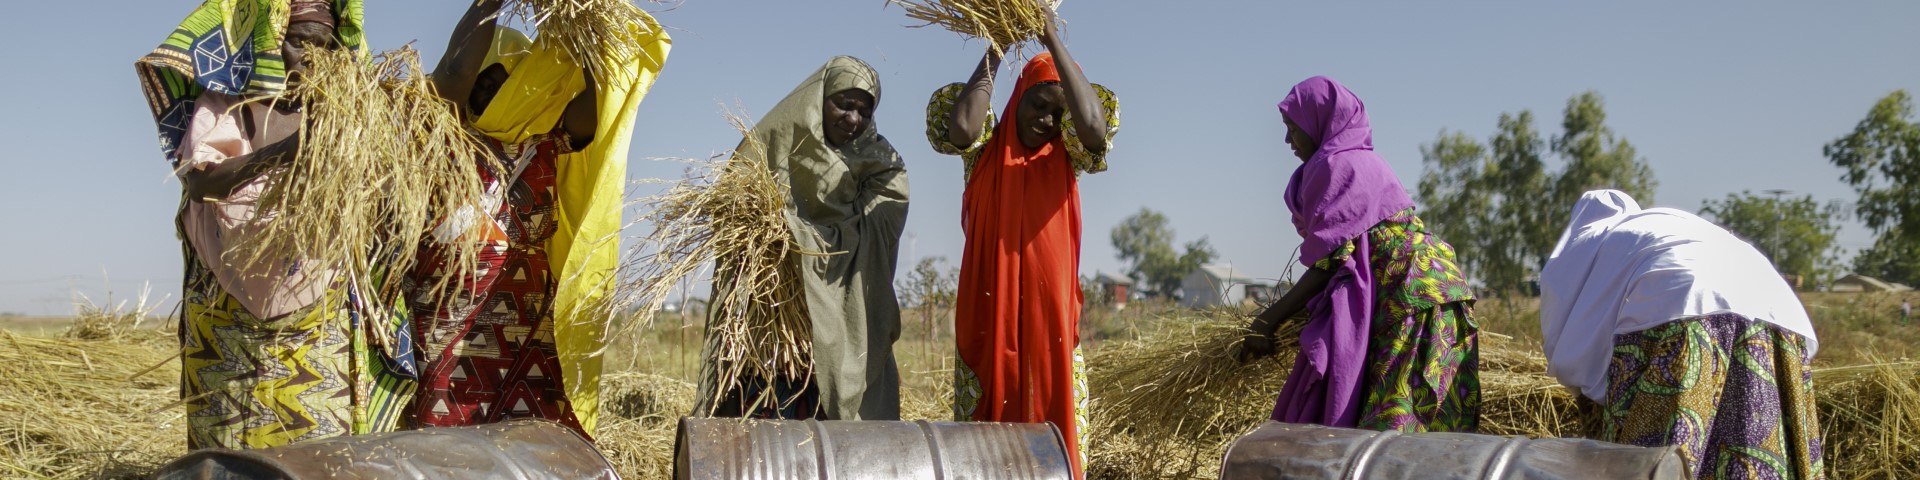 Women gather straw on a field.